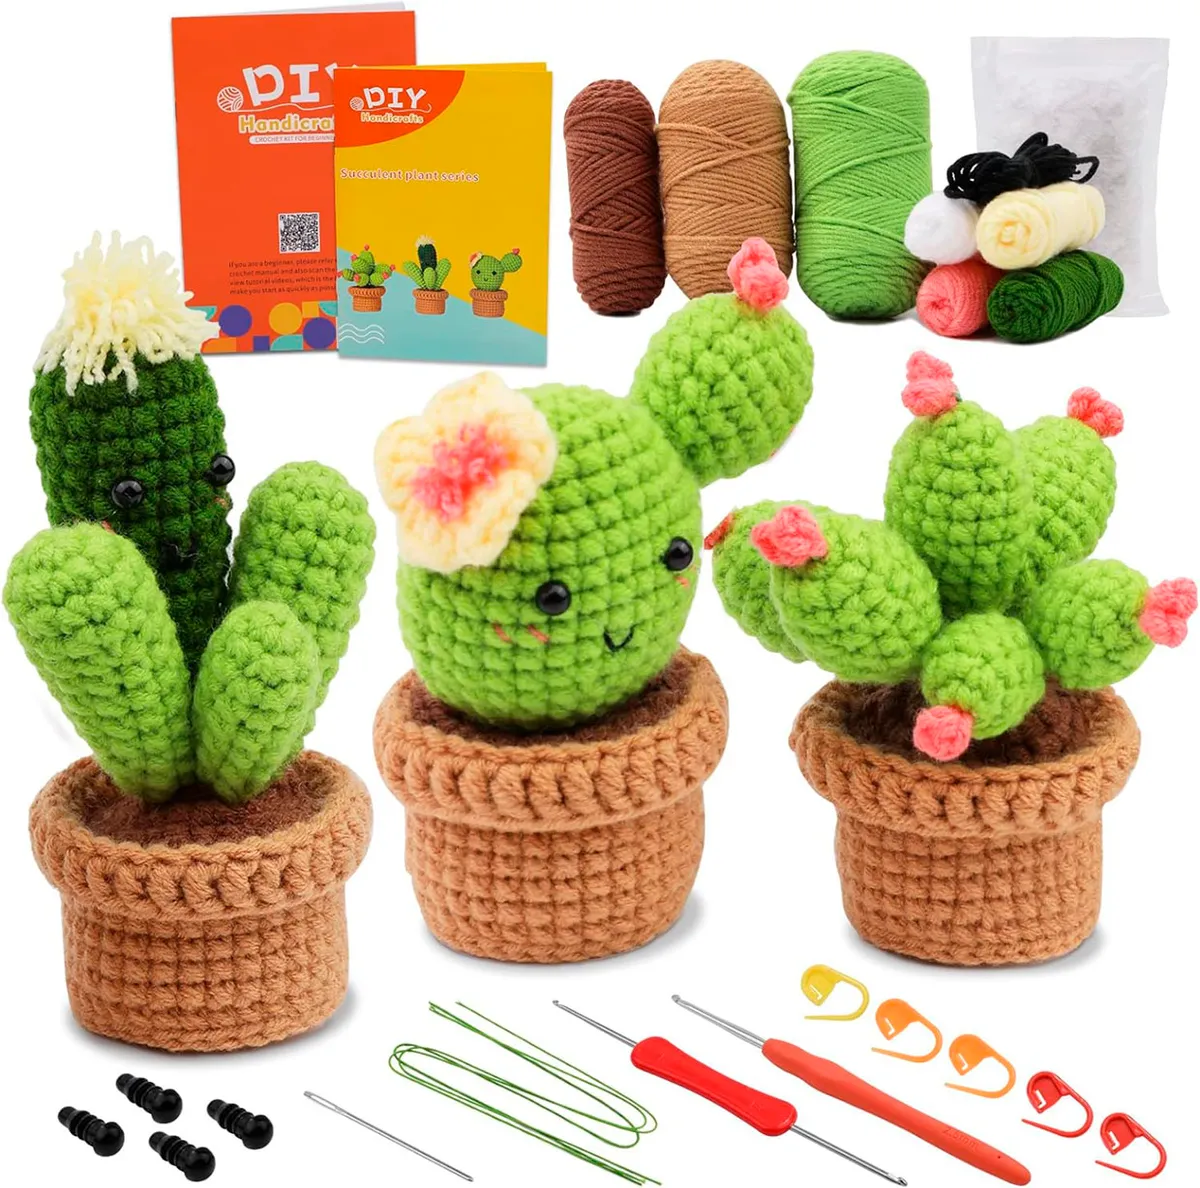 Crochet cactus kits